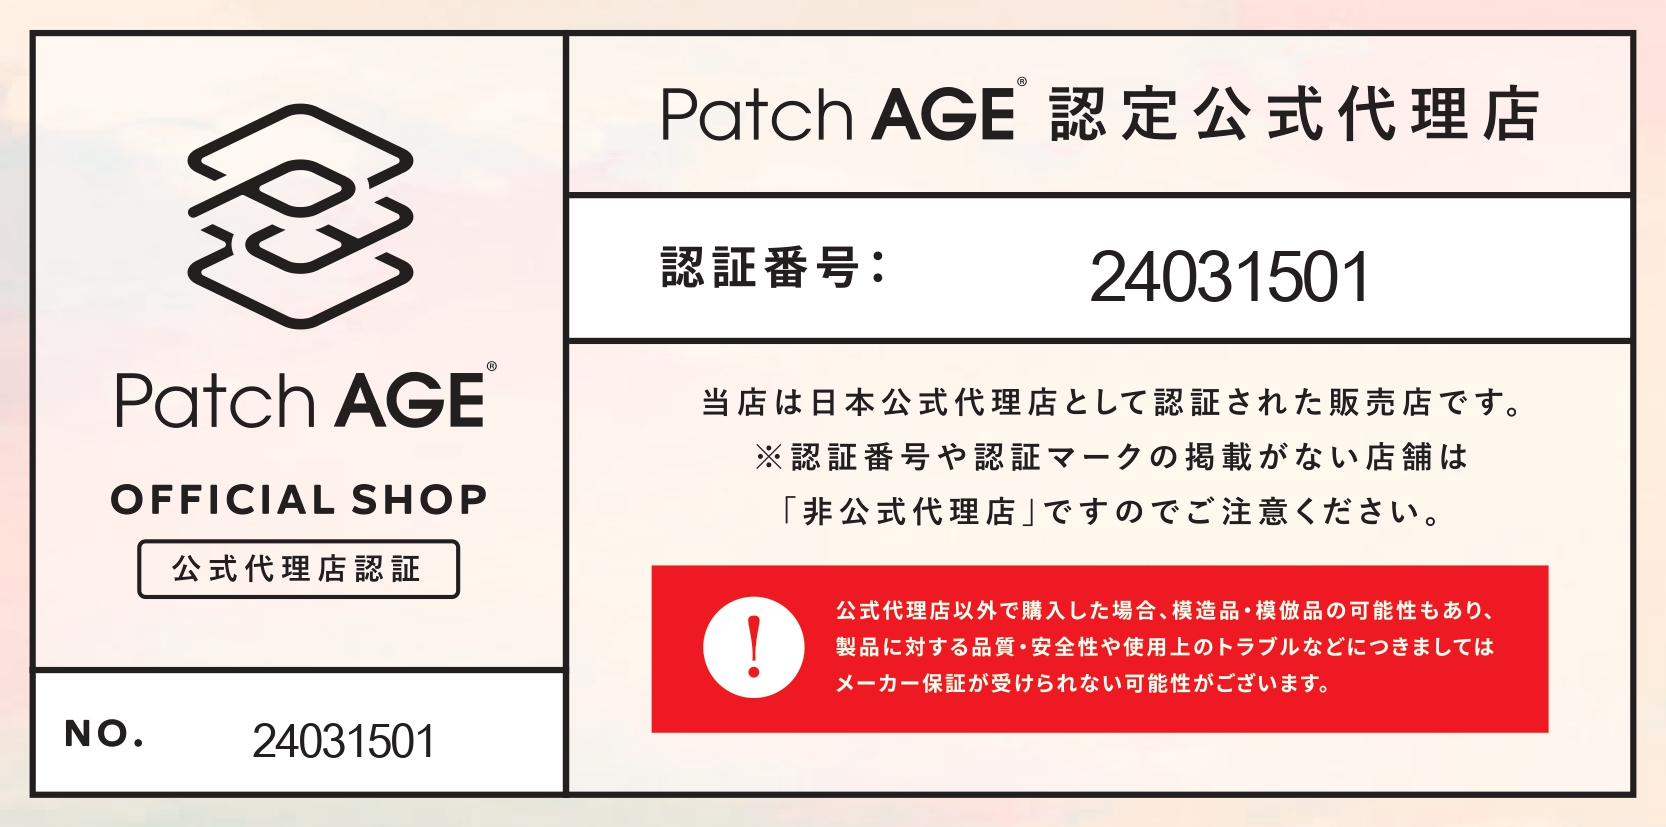 Patch AGE 認定公式代理店　当店は日本公式代理店として認証された販売店です。※認証番号や認証マークの掲載がない店舗は「非公式代理店」ですのでご注意ください。認証番号：24031501